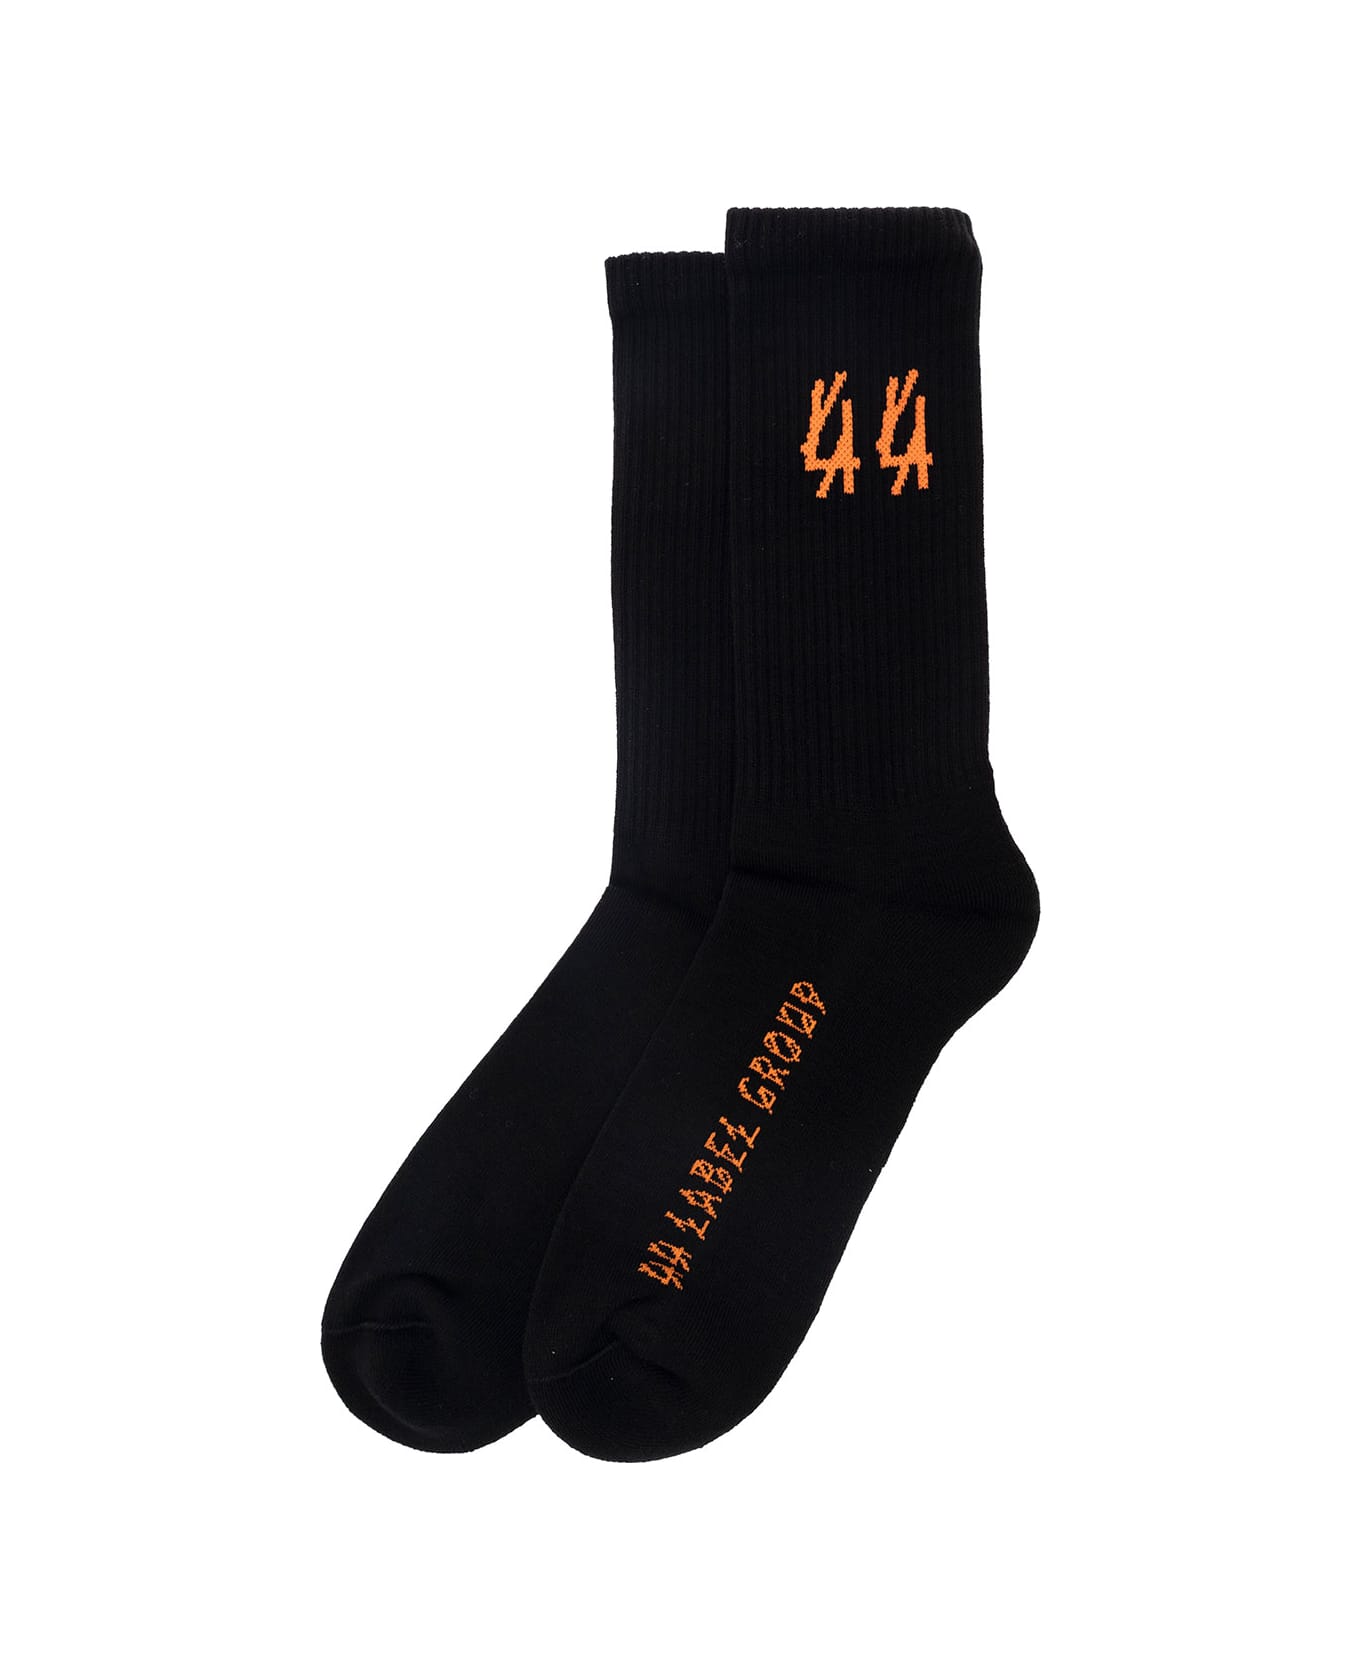 44 Label Group Black Socks With Contrasting Logo Detail In Cotton Blend Man - Black